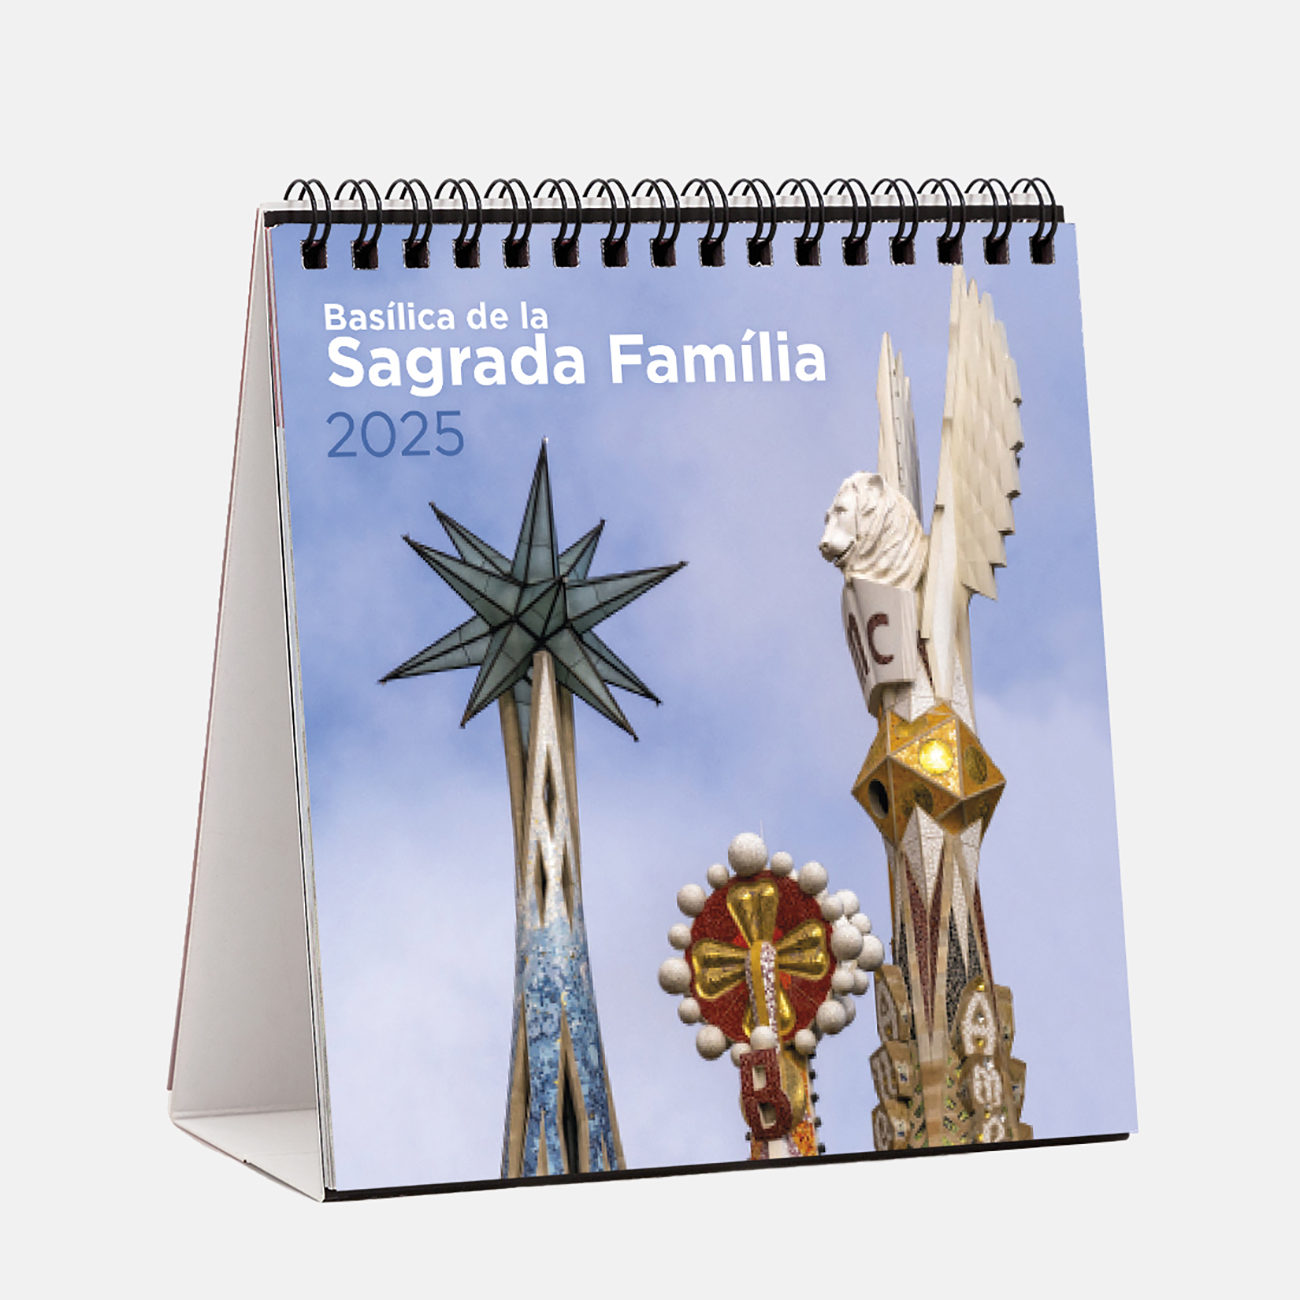 Calendar 2025 Basílica de la Sagrada Família s25sf calendario sobremesa 2025 sagrada familia